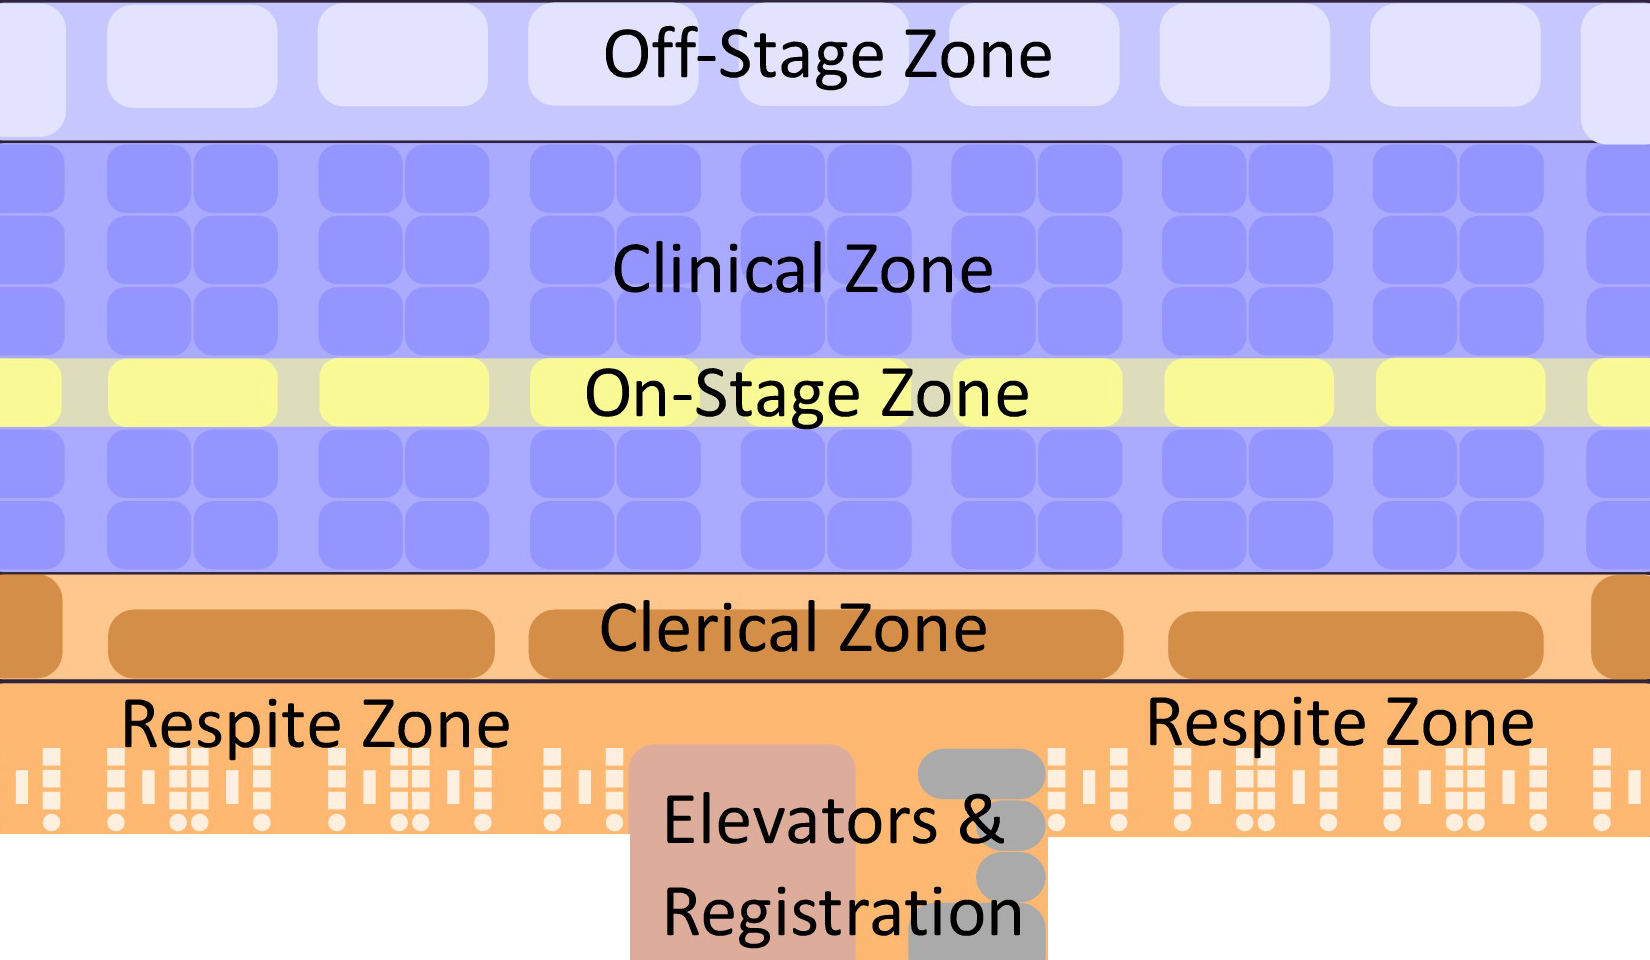 Graphic of hospital design zones in purple and orange